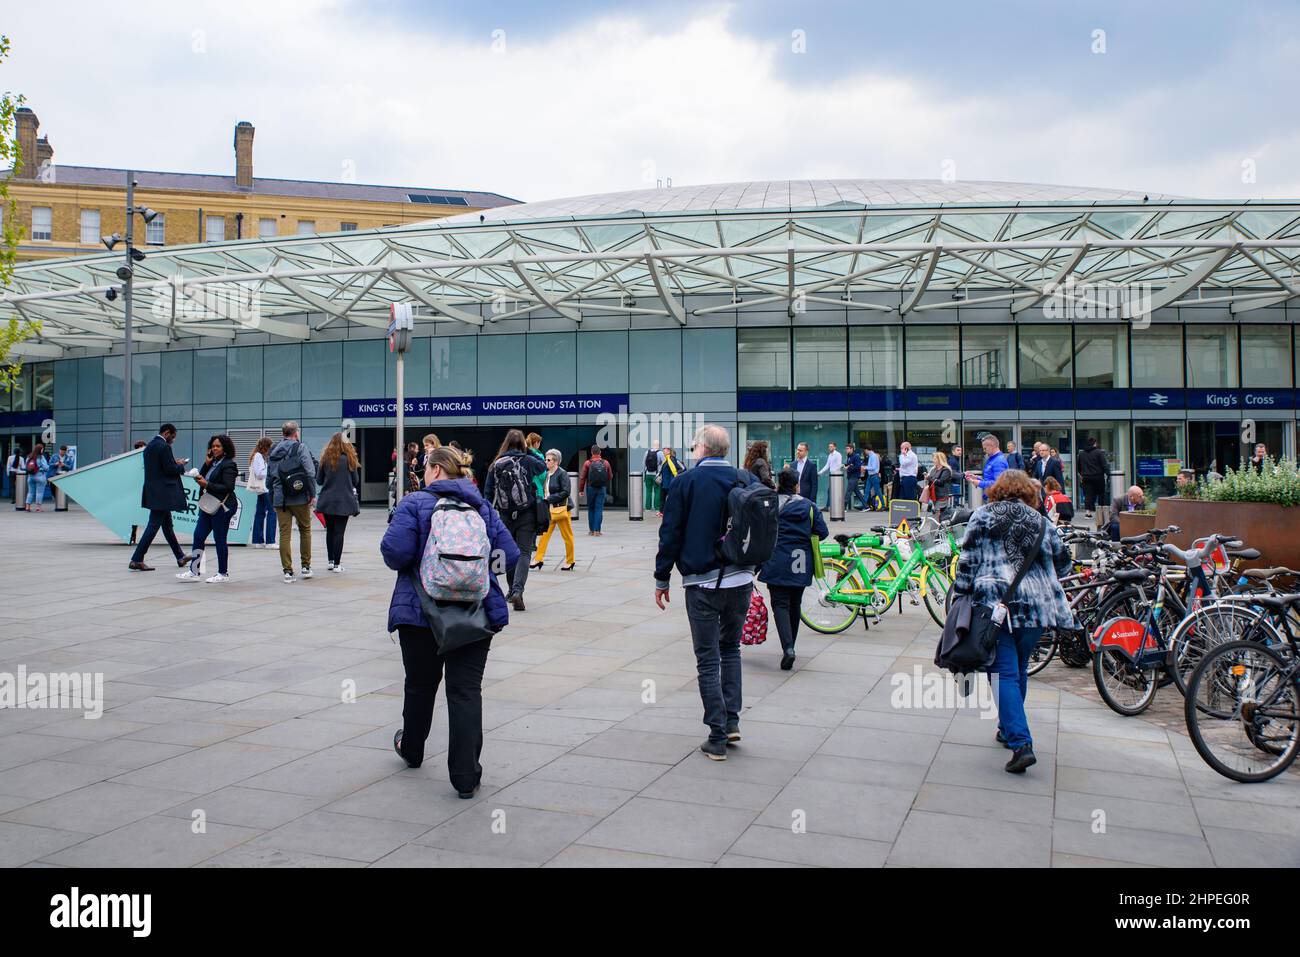 King's Cross railway station in London, United Kingdom Stock Photo